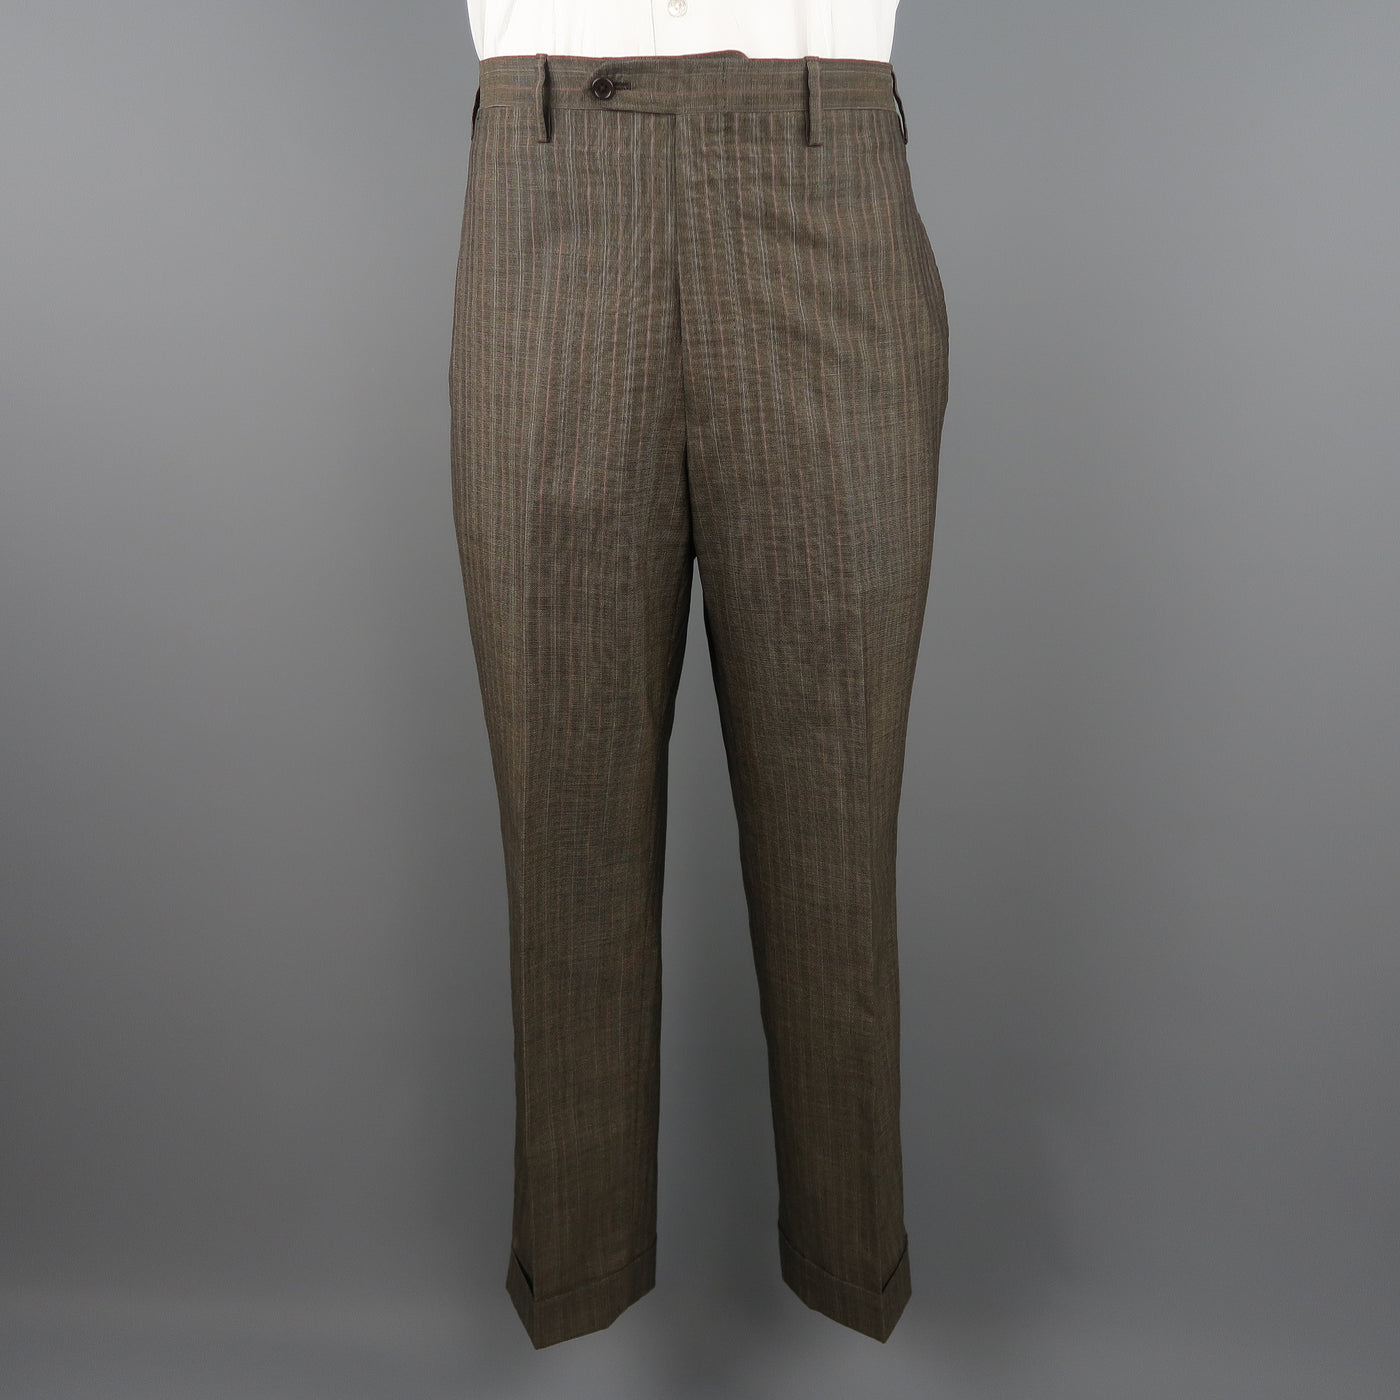 KITON 42 Regular Brown & Orange Pinstripe Cashmere 3 Button Notch Lapel Suit